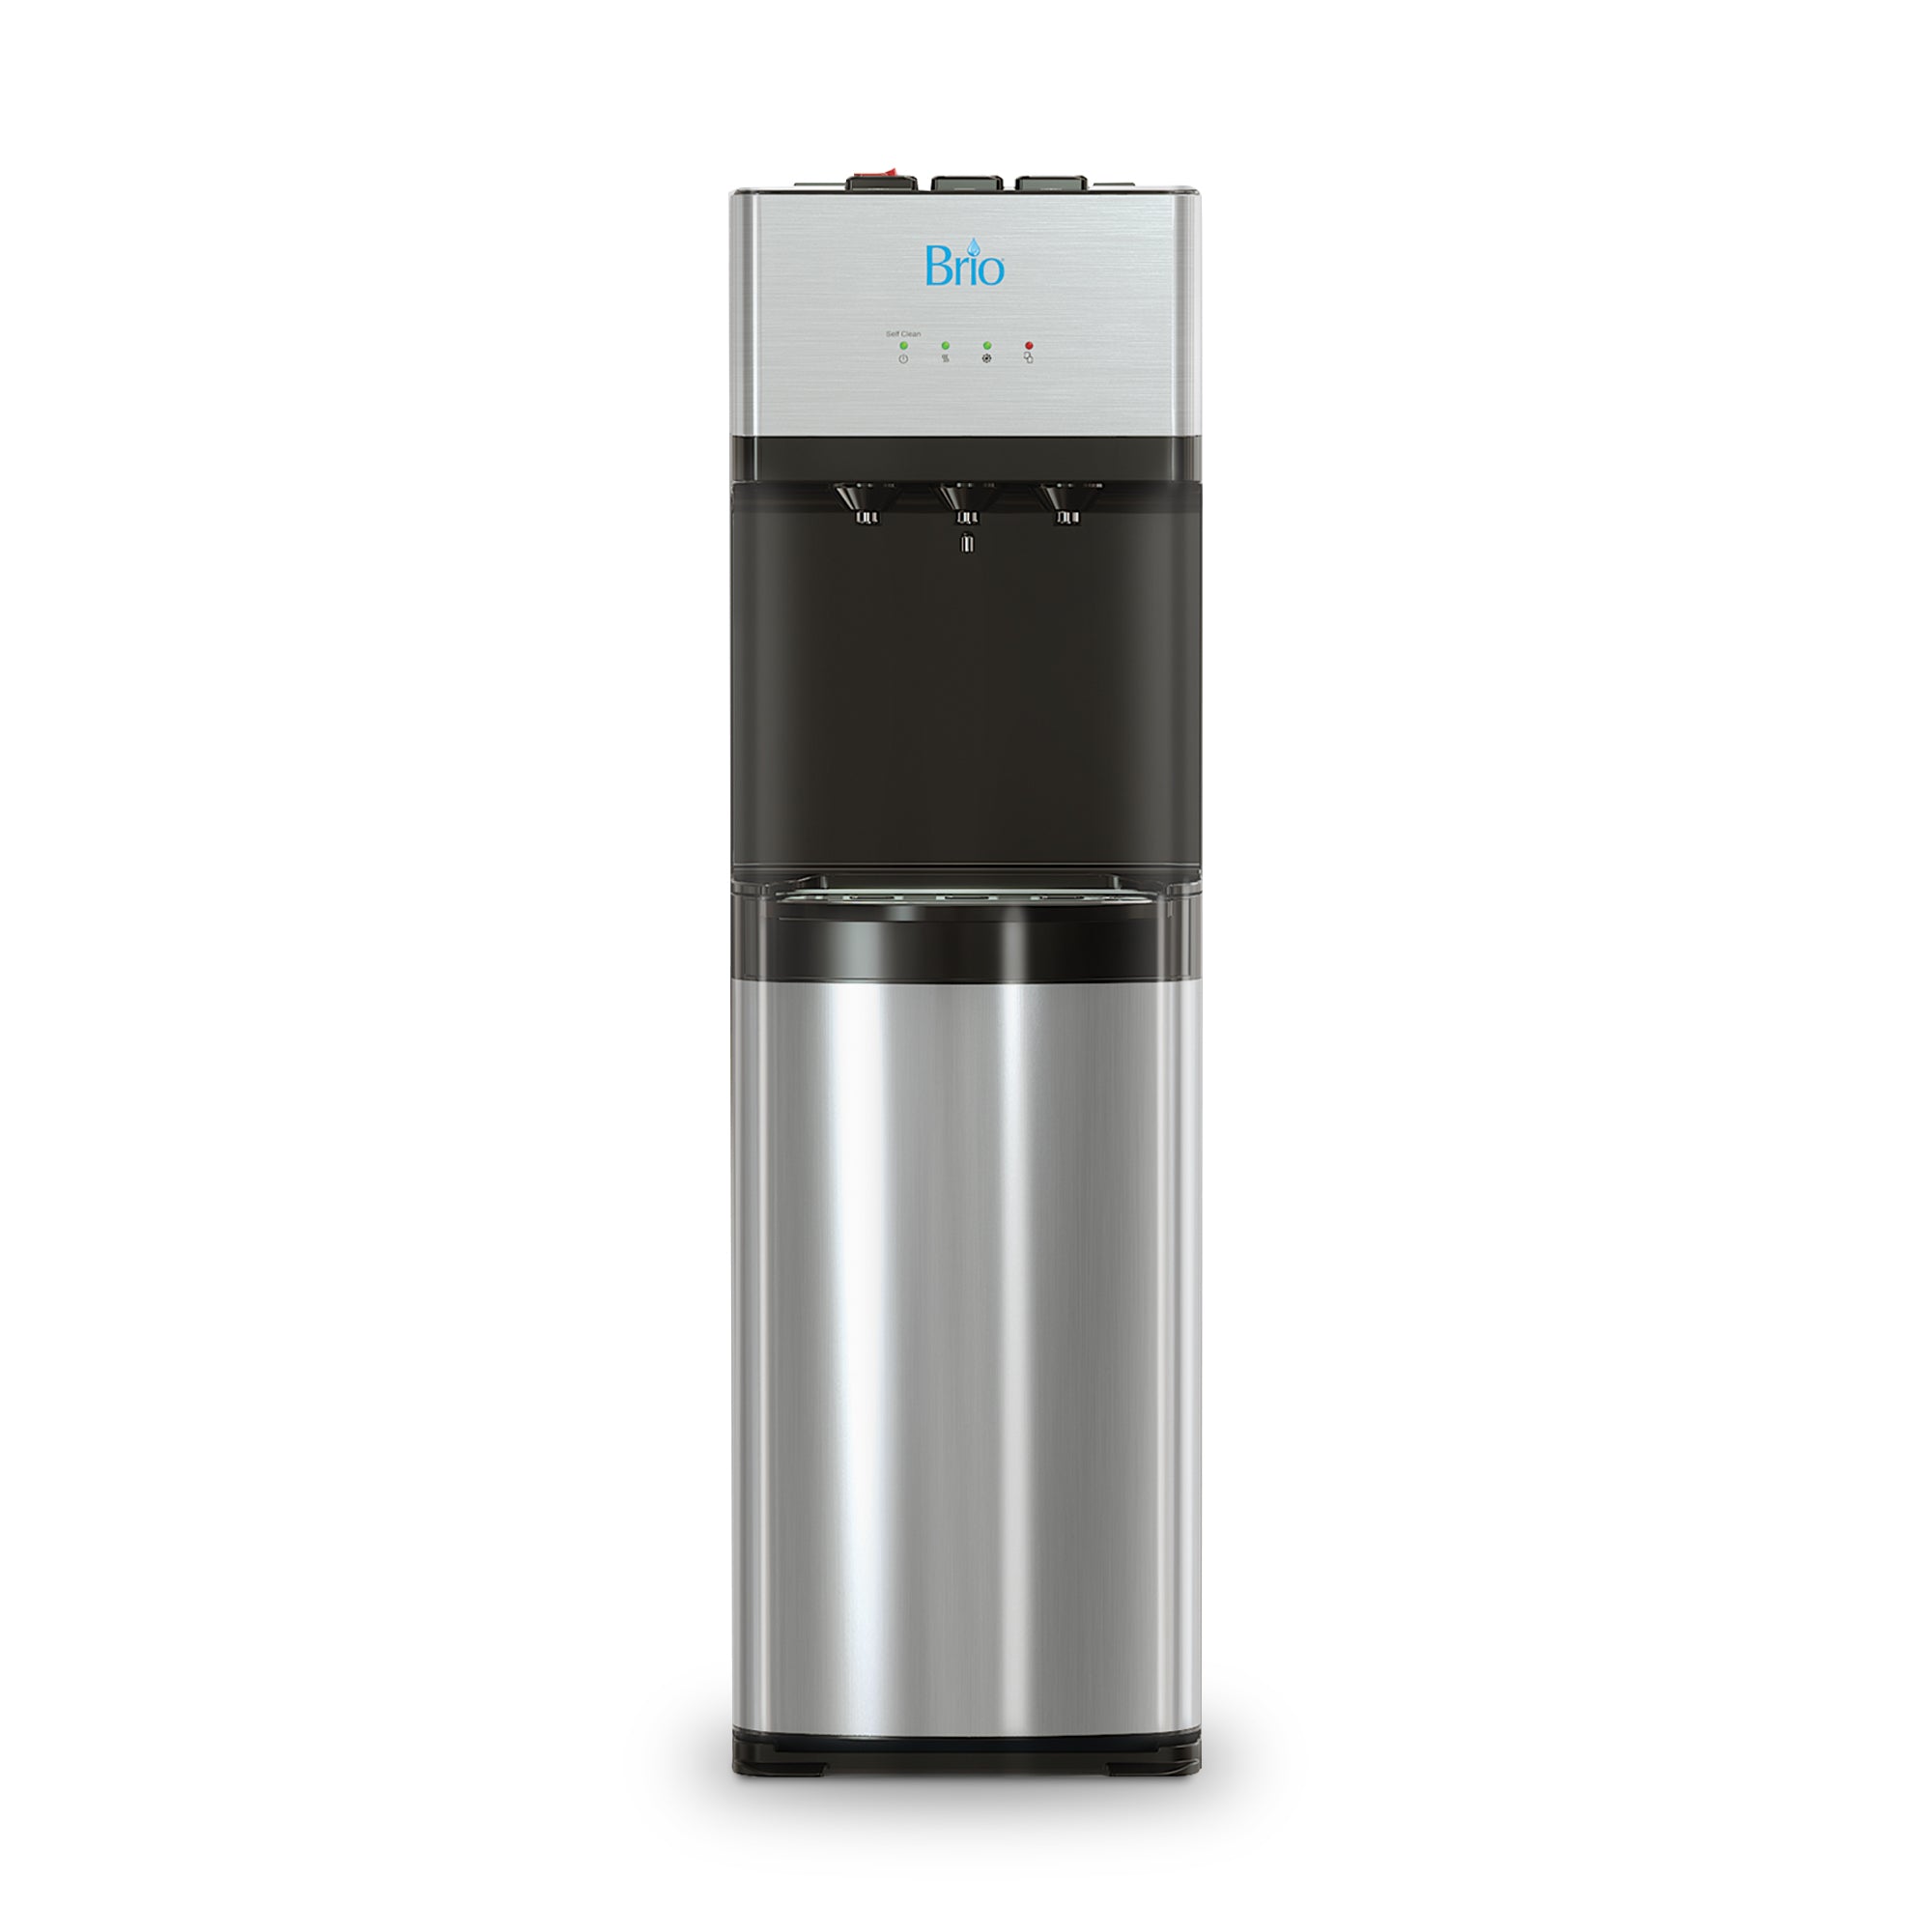 Reviews for Brio Self-Cleaning Bottleless Water Cooler Dispenser